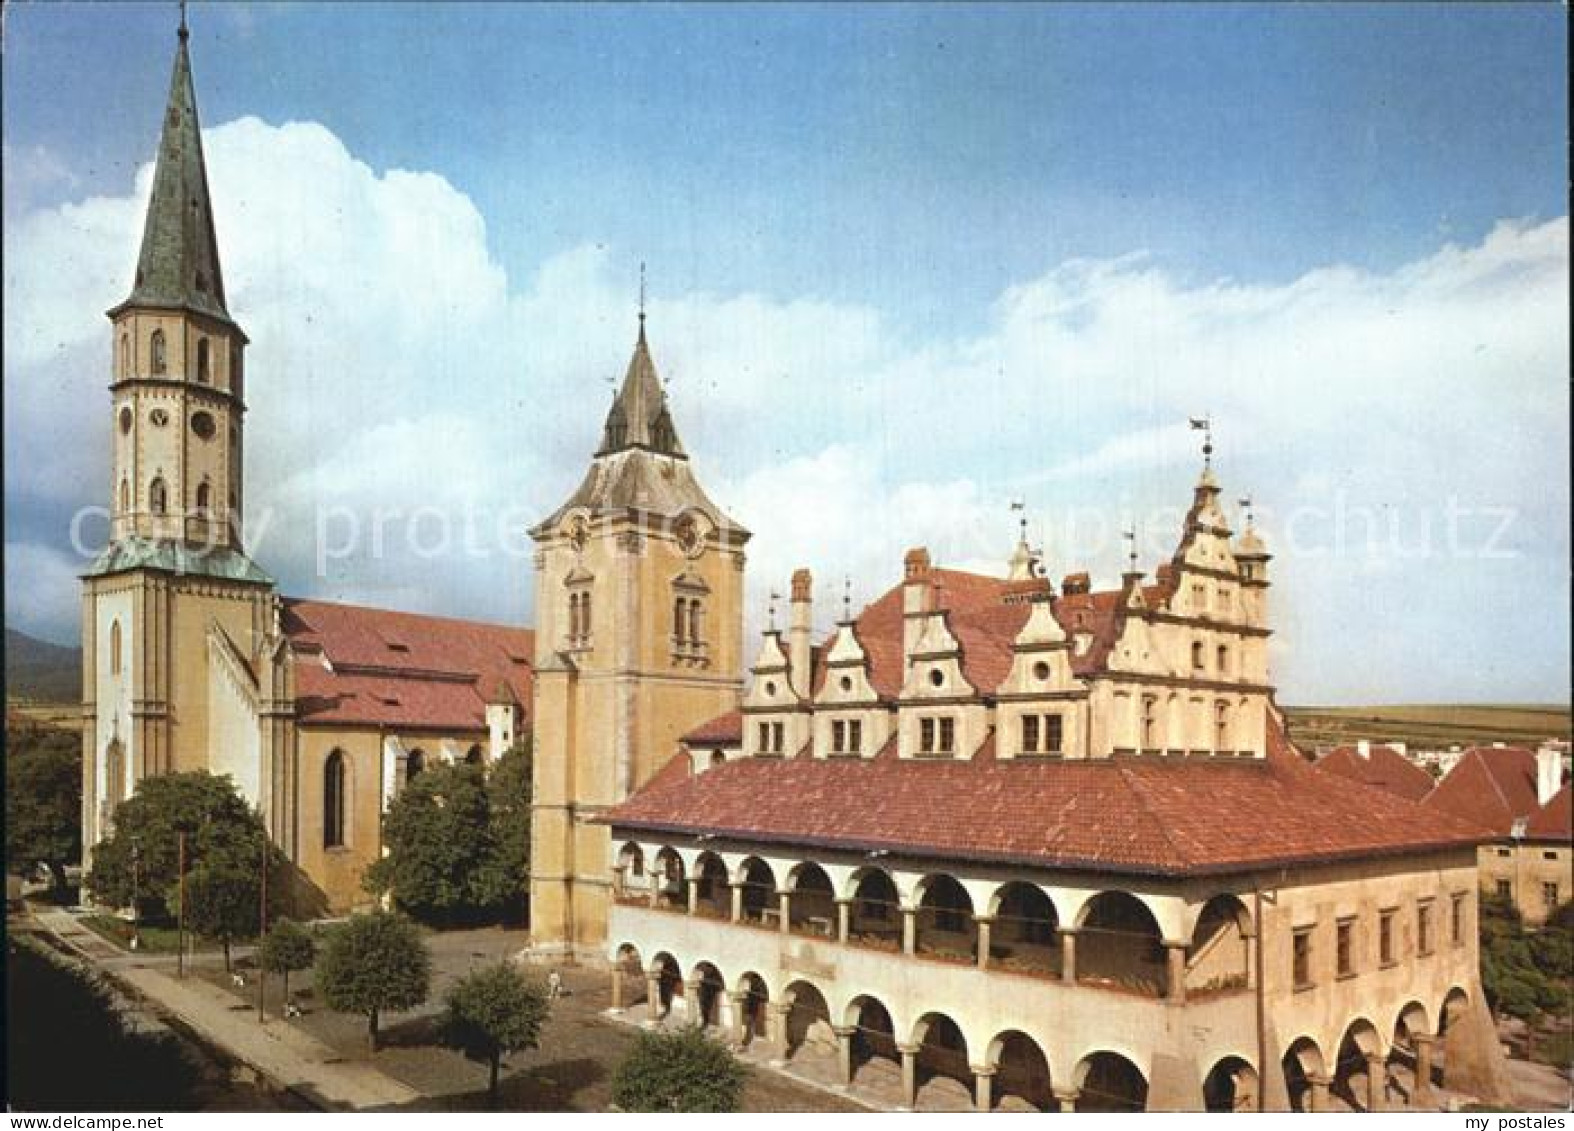 72497256 Levoca Slovakia Rathaus Kirche Heiliger Jakob  - Slowakei